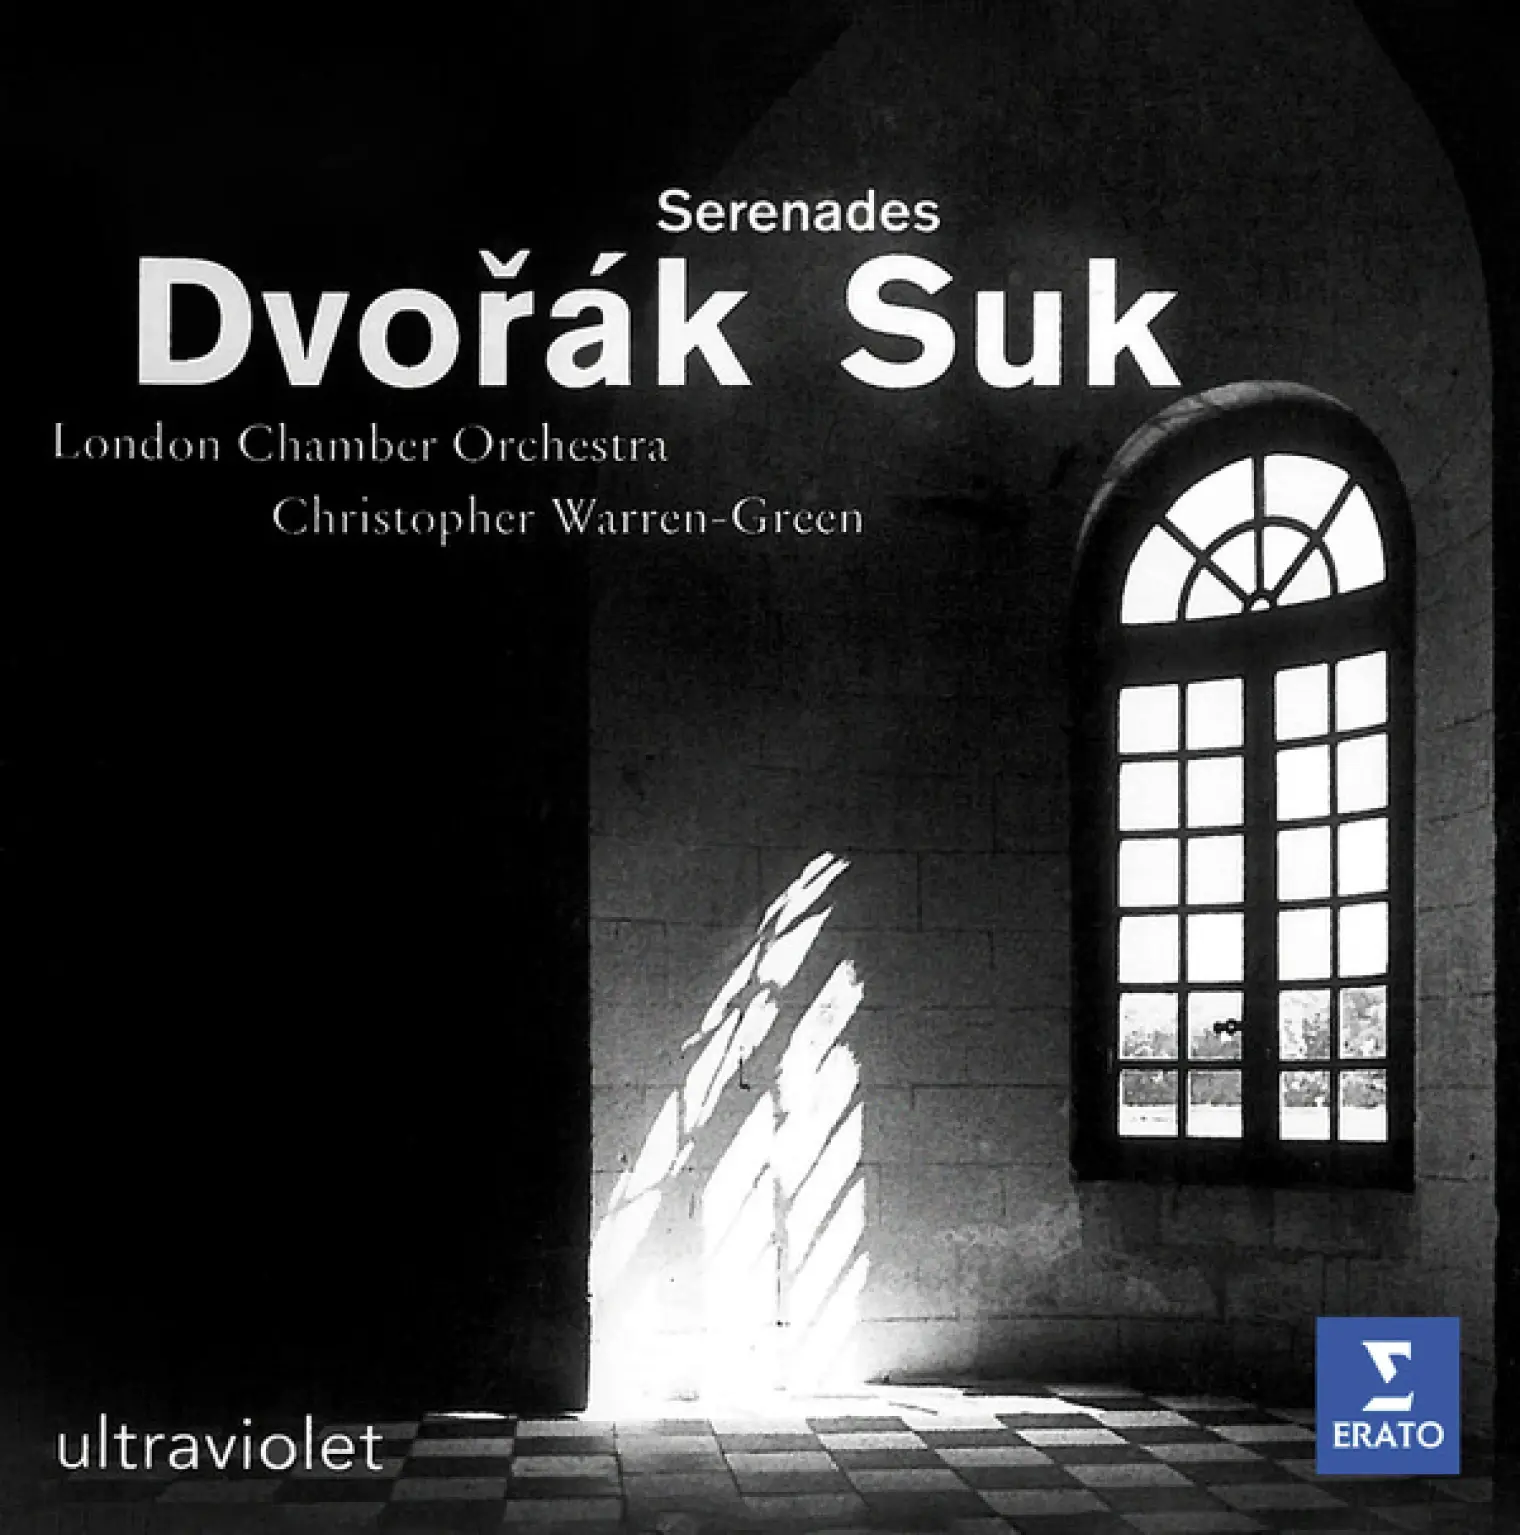 Dvořák & Suk: Serenades -  London Chamber Orchestra 